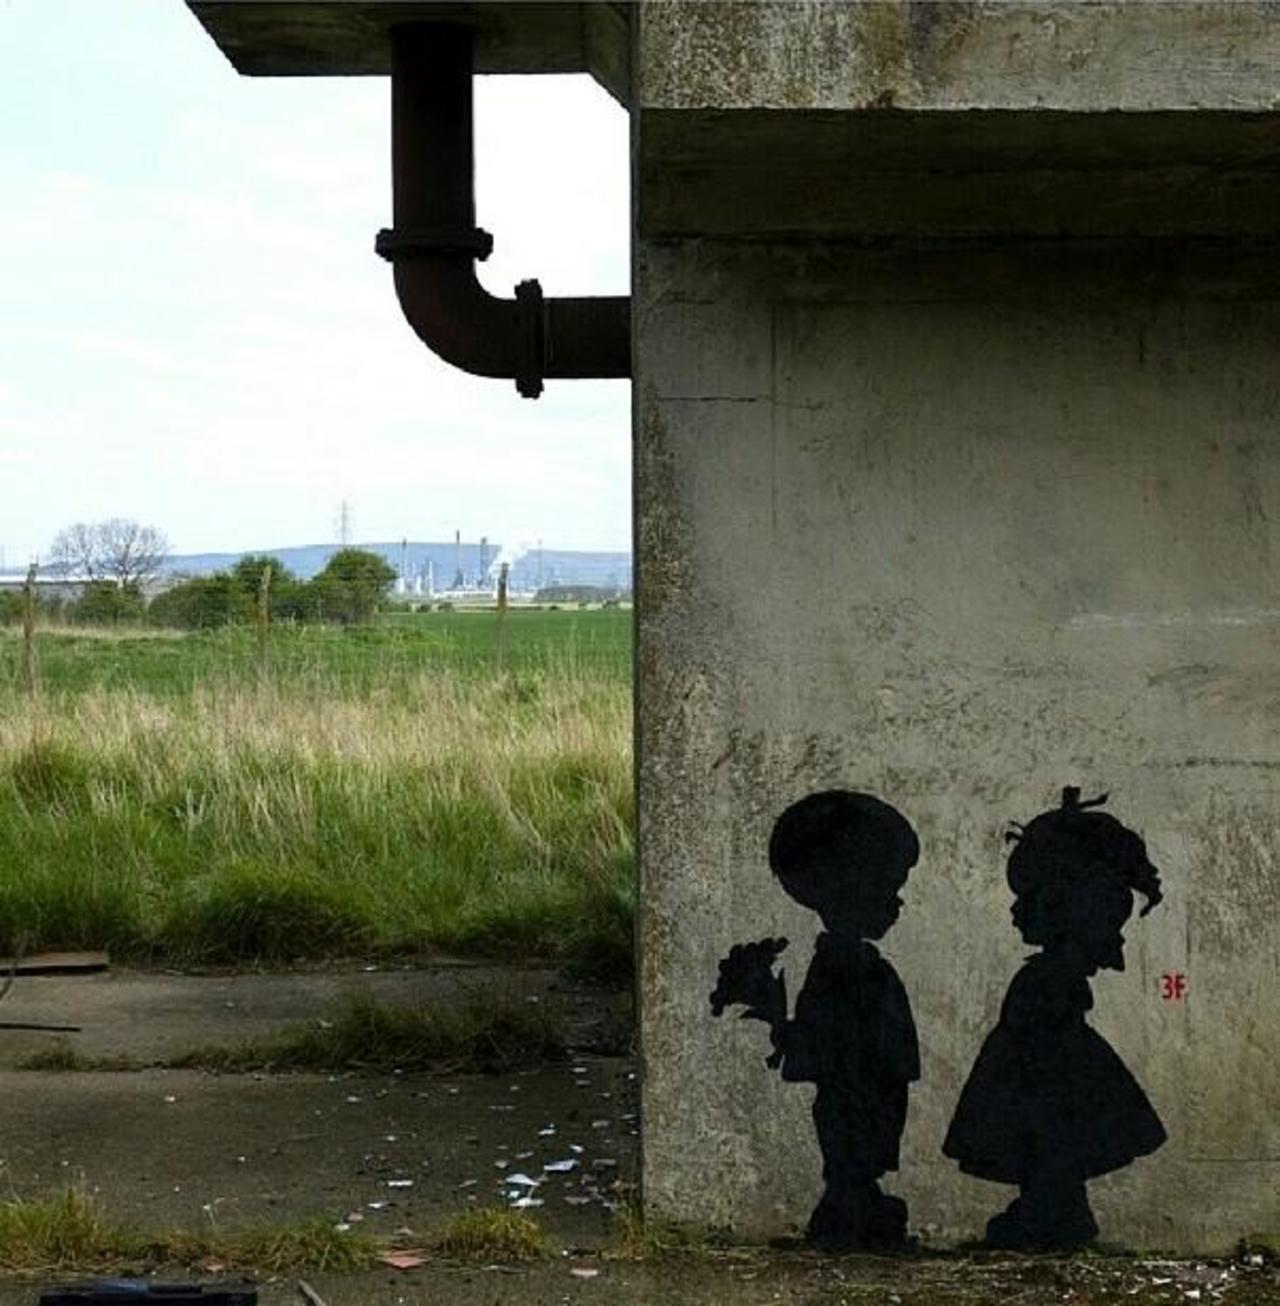 Found love in a hopeless place!

Street Art by 3fountains 

#art #mural #graffiti #streetart http://t.co/acVLESWqXI